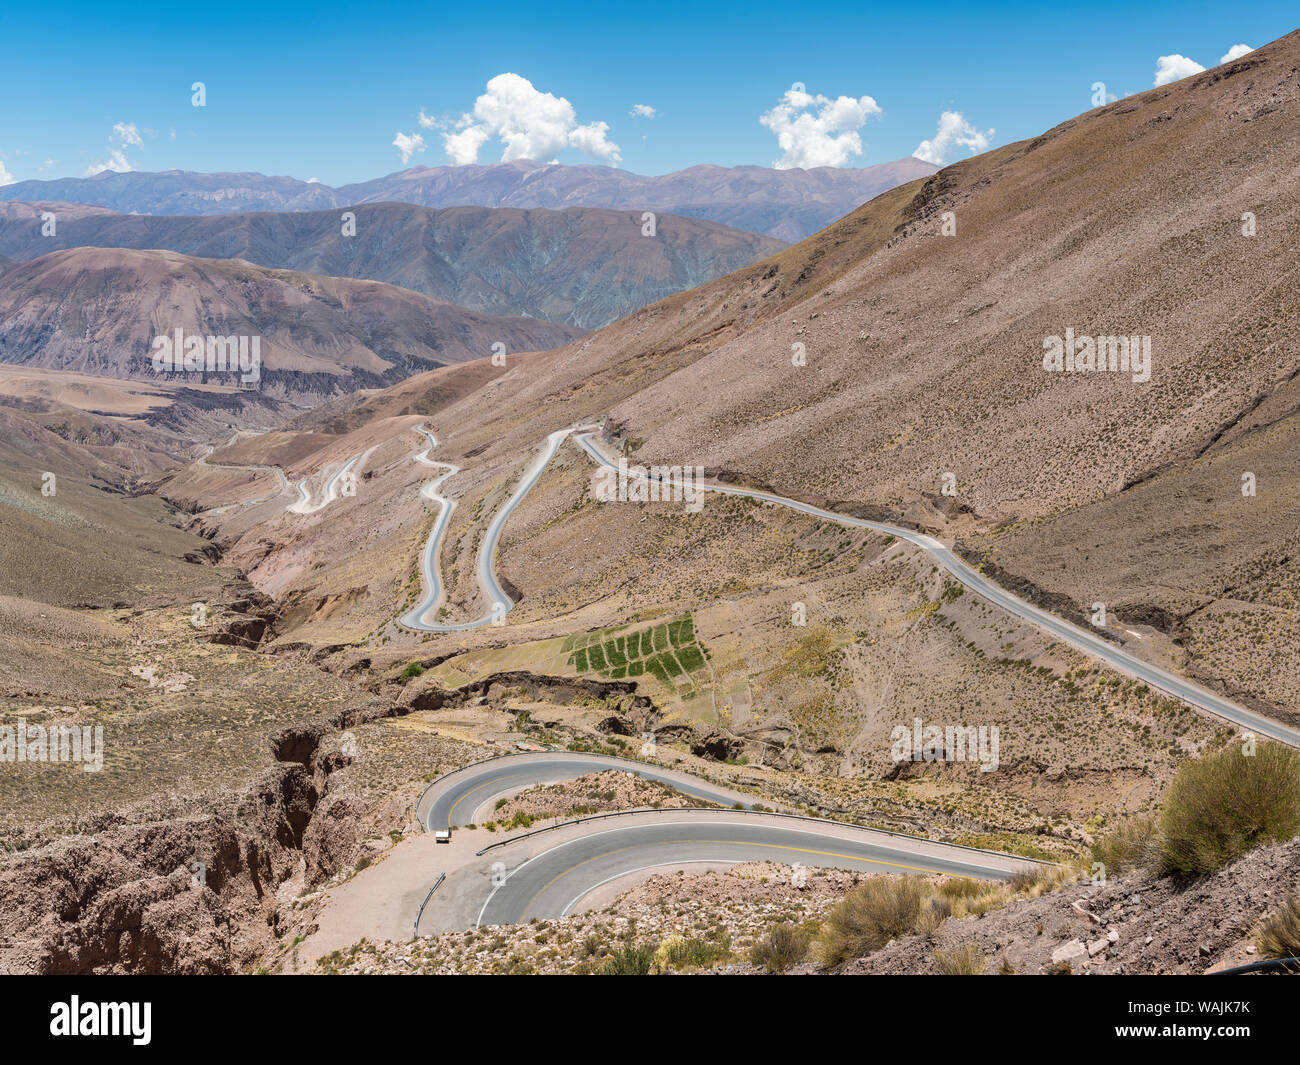 National Road RN 52, the mountain road Cuesta del Lipan climbing up to Abra de Potrerillos, Argentina. Stock Photo